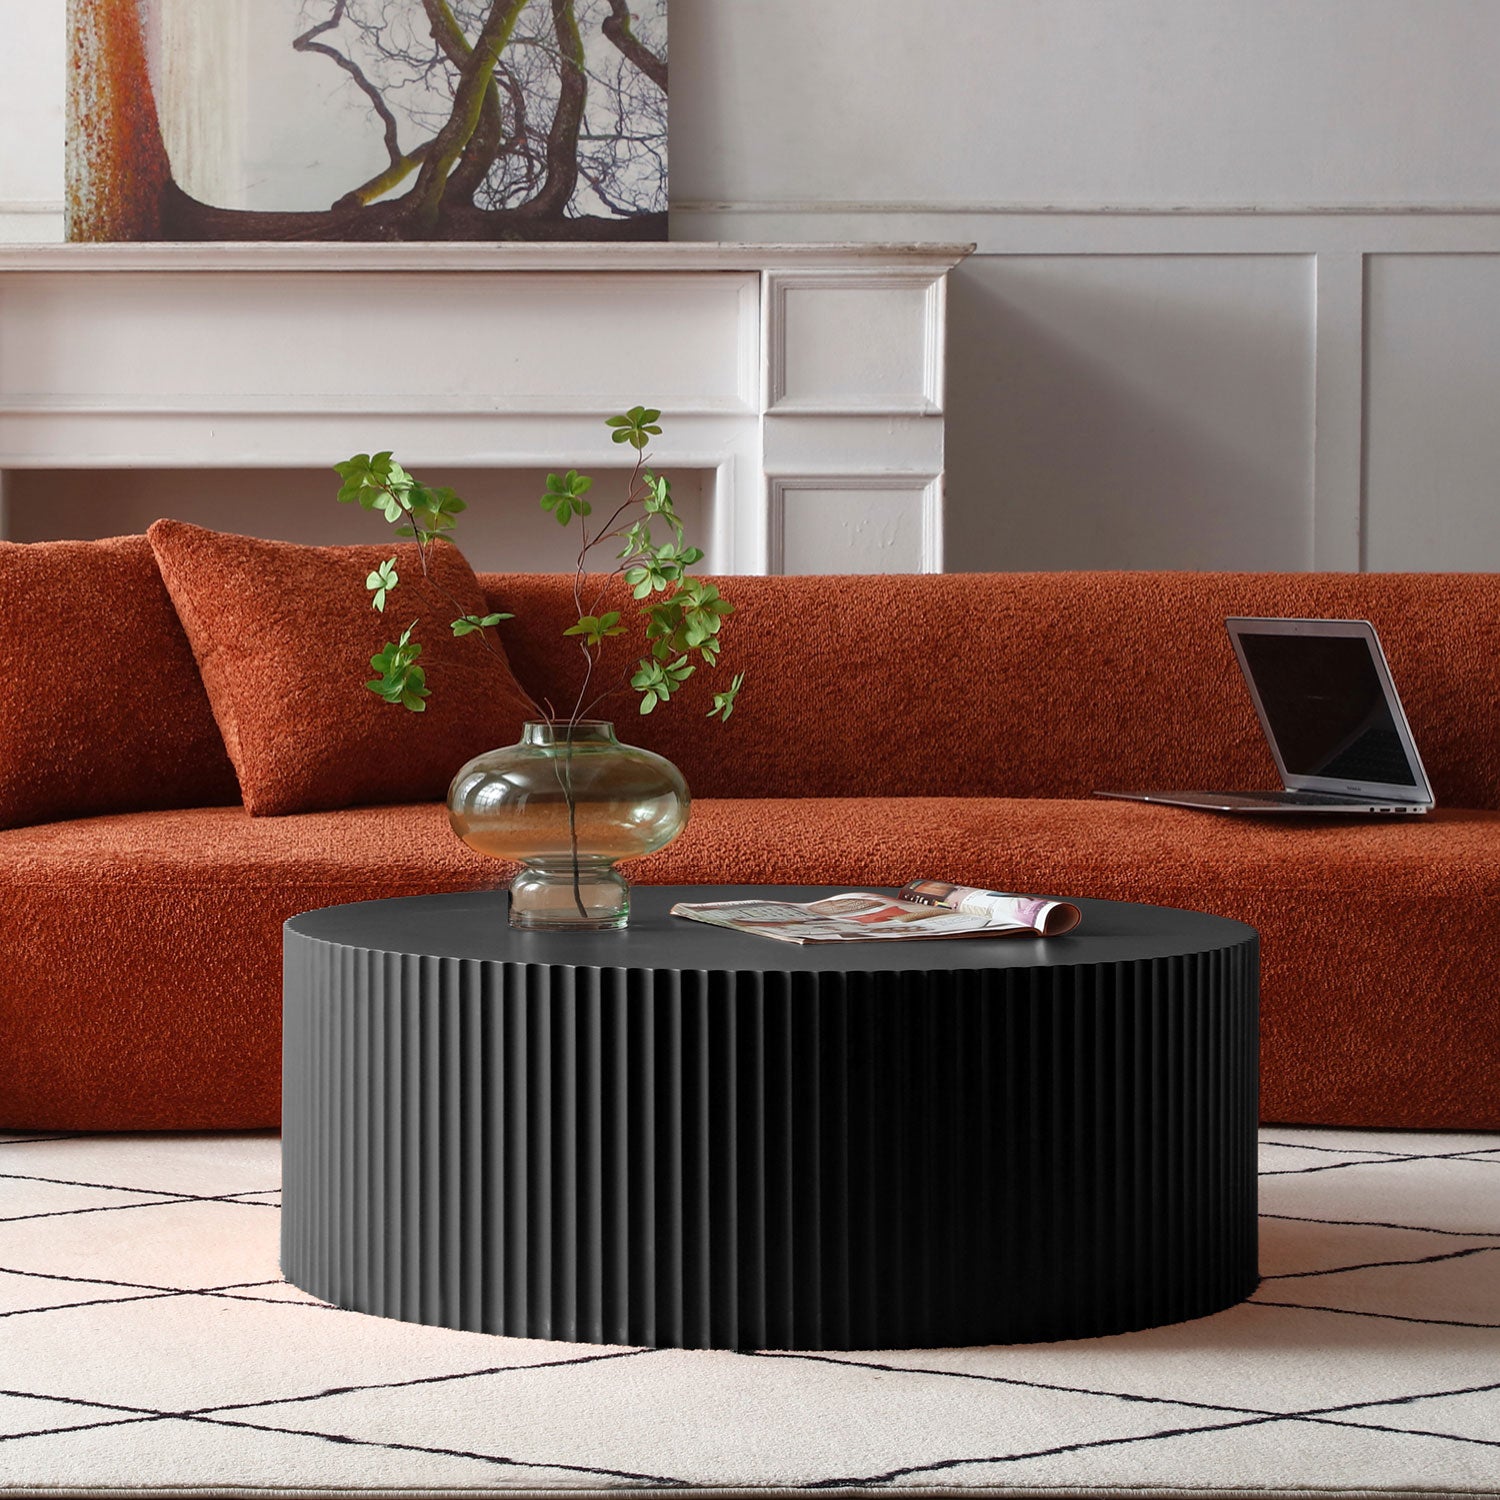 Justone Modern Round Relief Design Coffee Table - Black